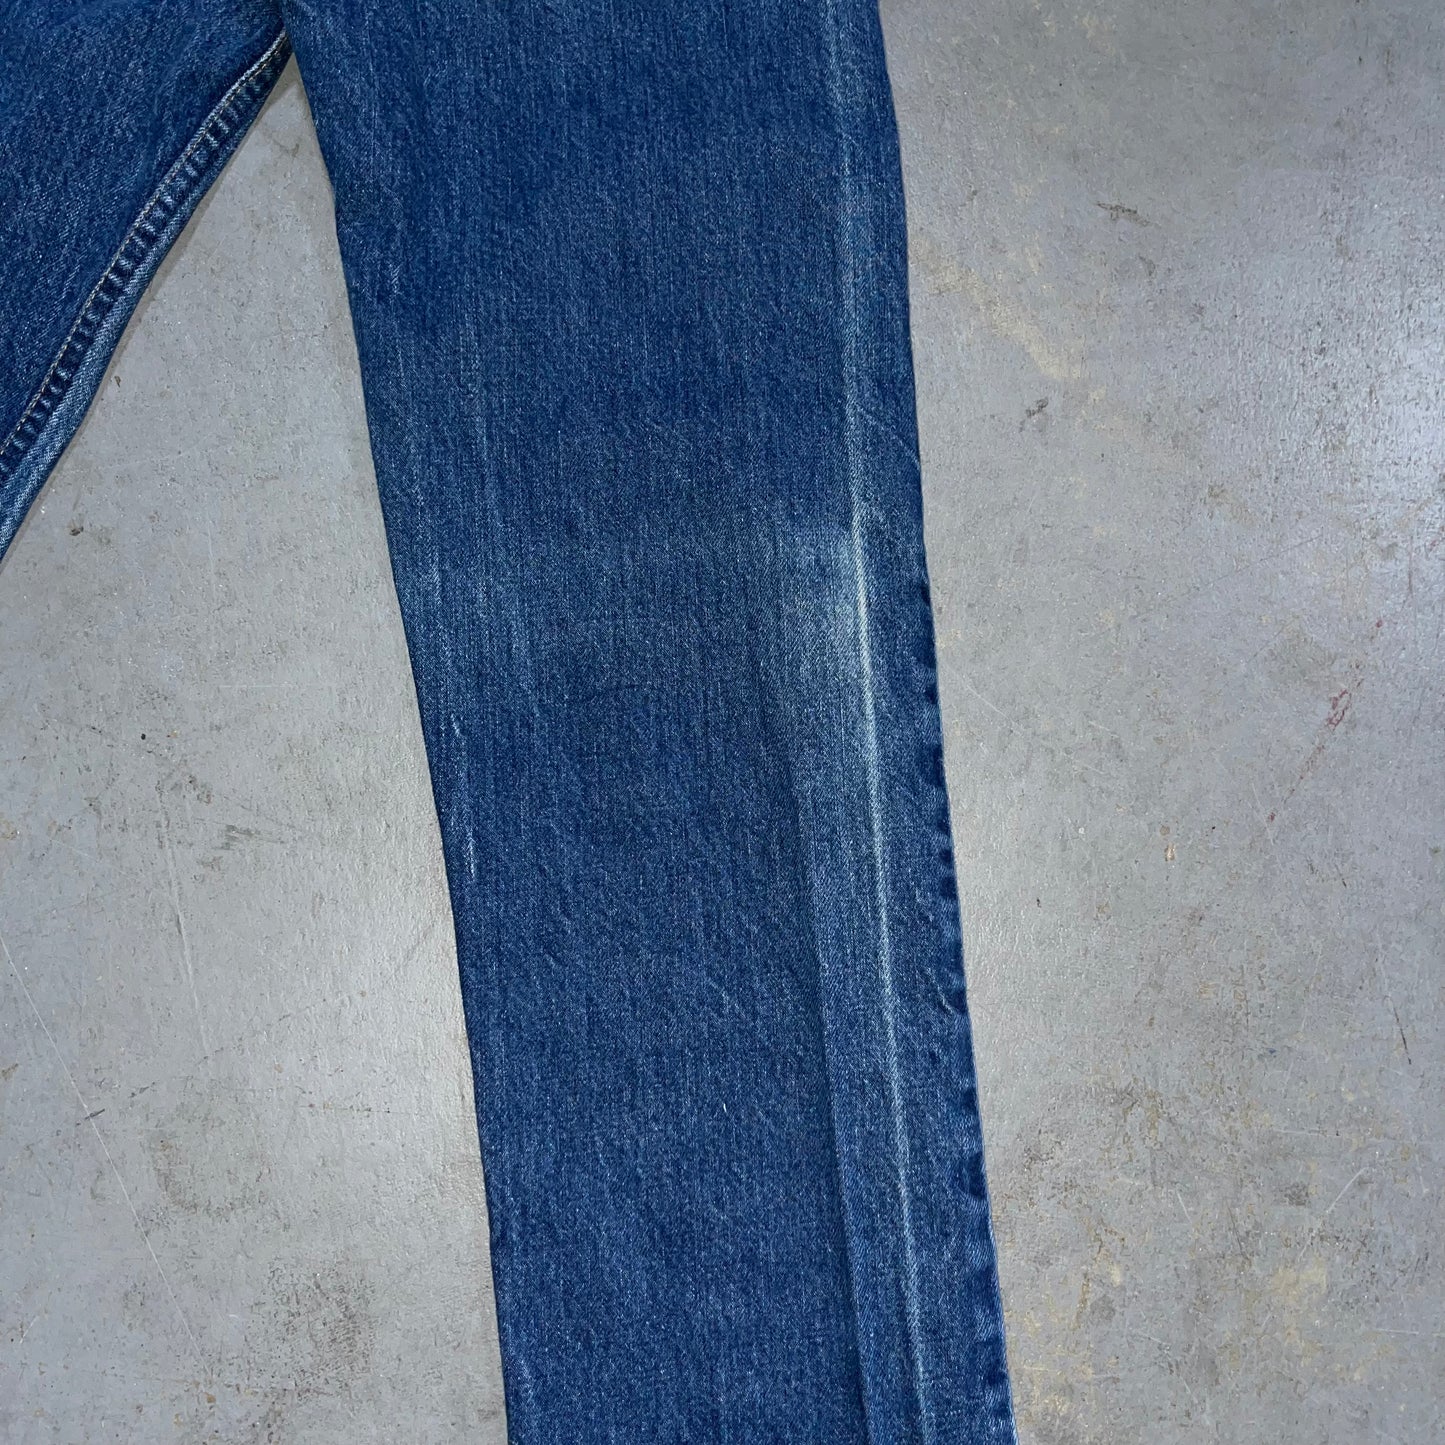 Vintage Levi’s 20505 0217 Orange Tab Jeans. Size 27 x 32